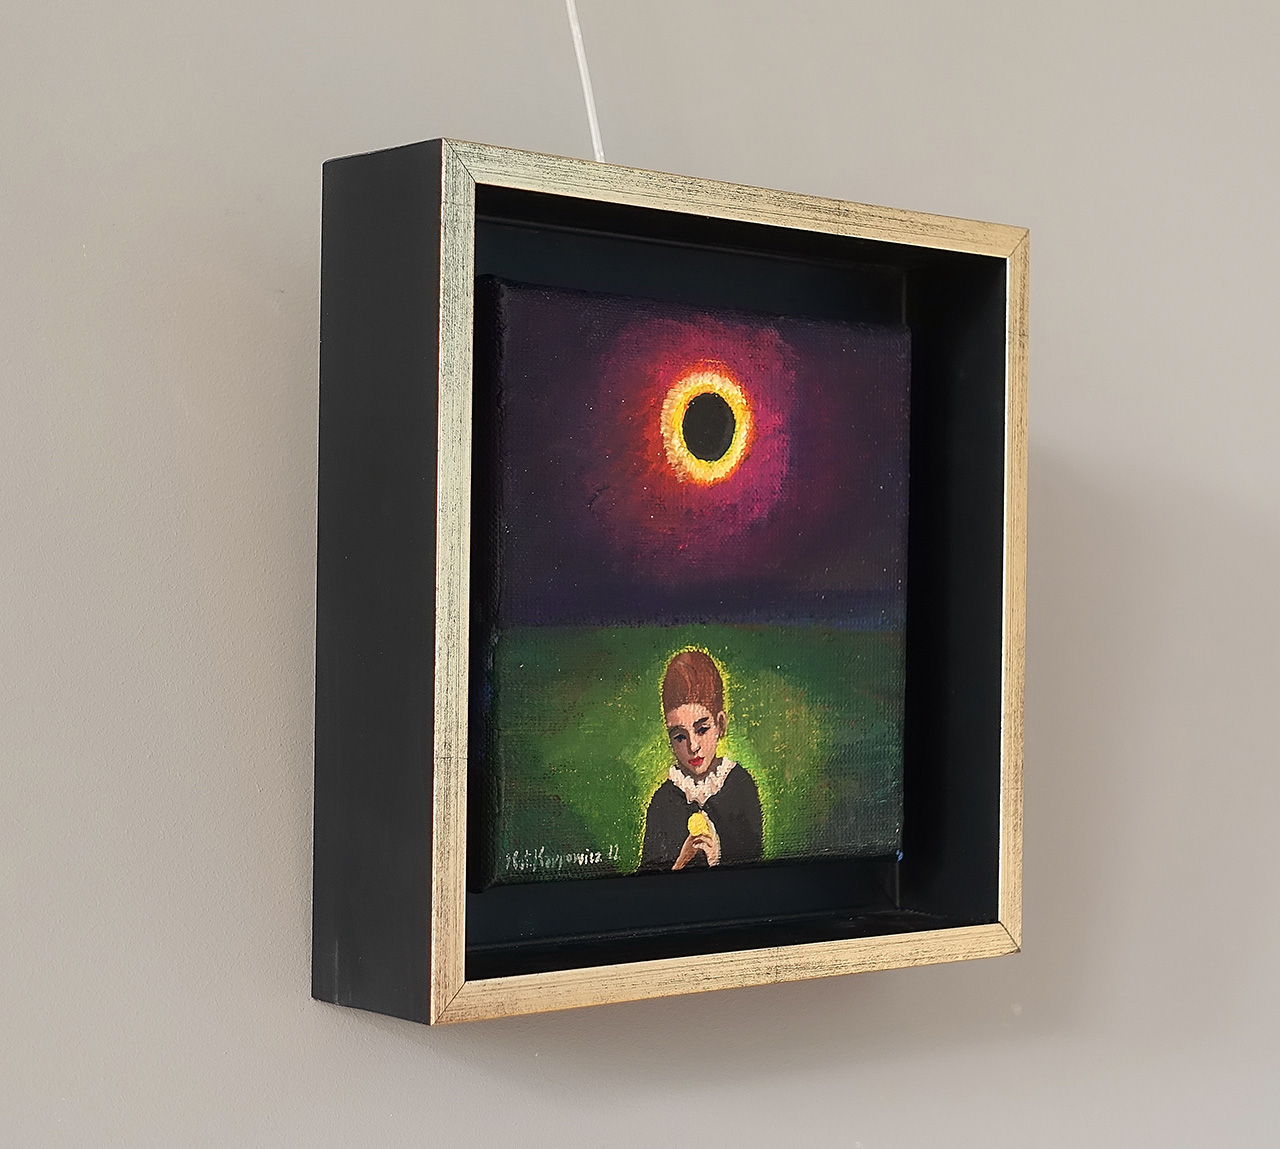 Katarzyna Karpowicz - Little gift (Black hole sun)